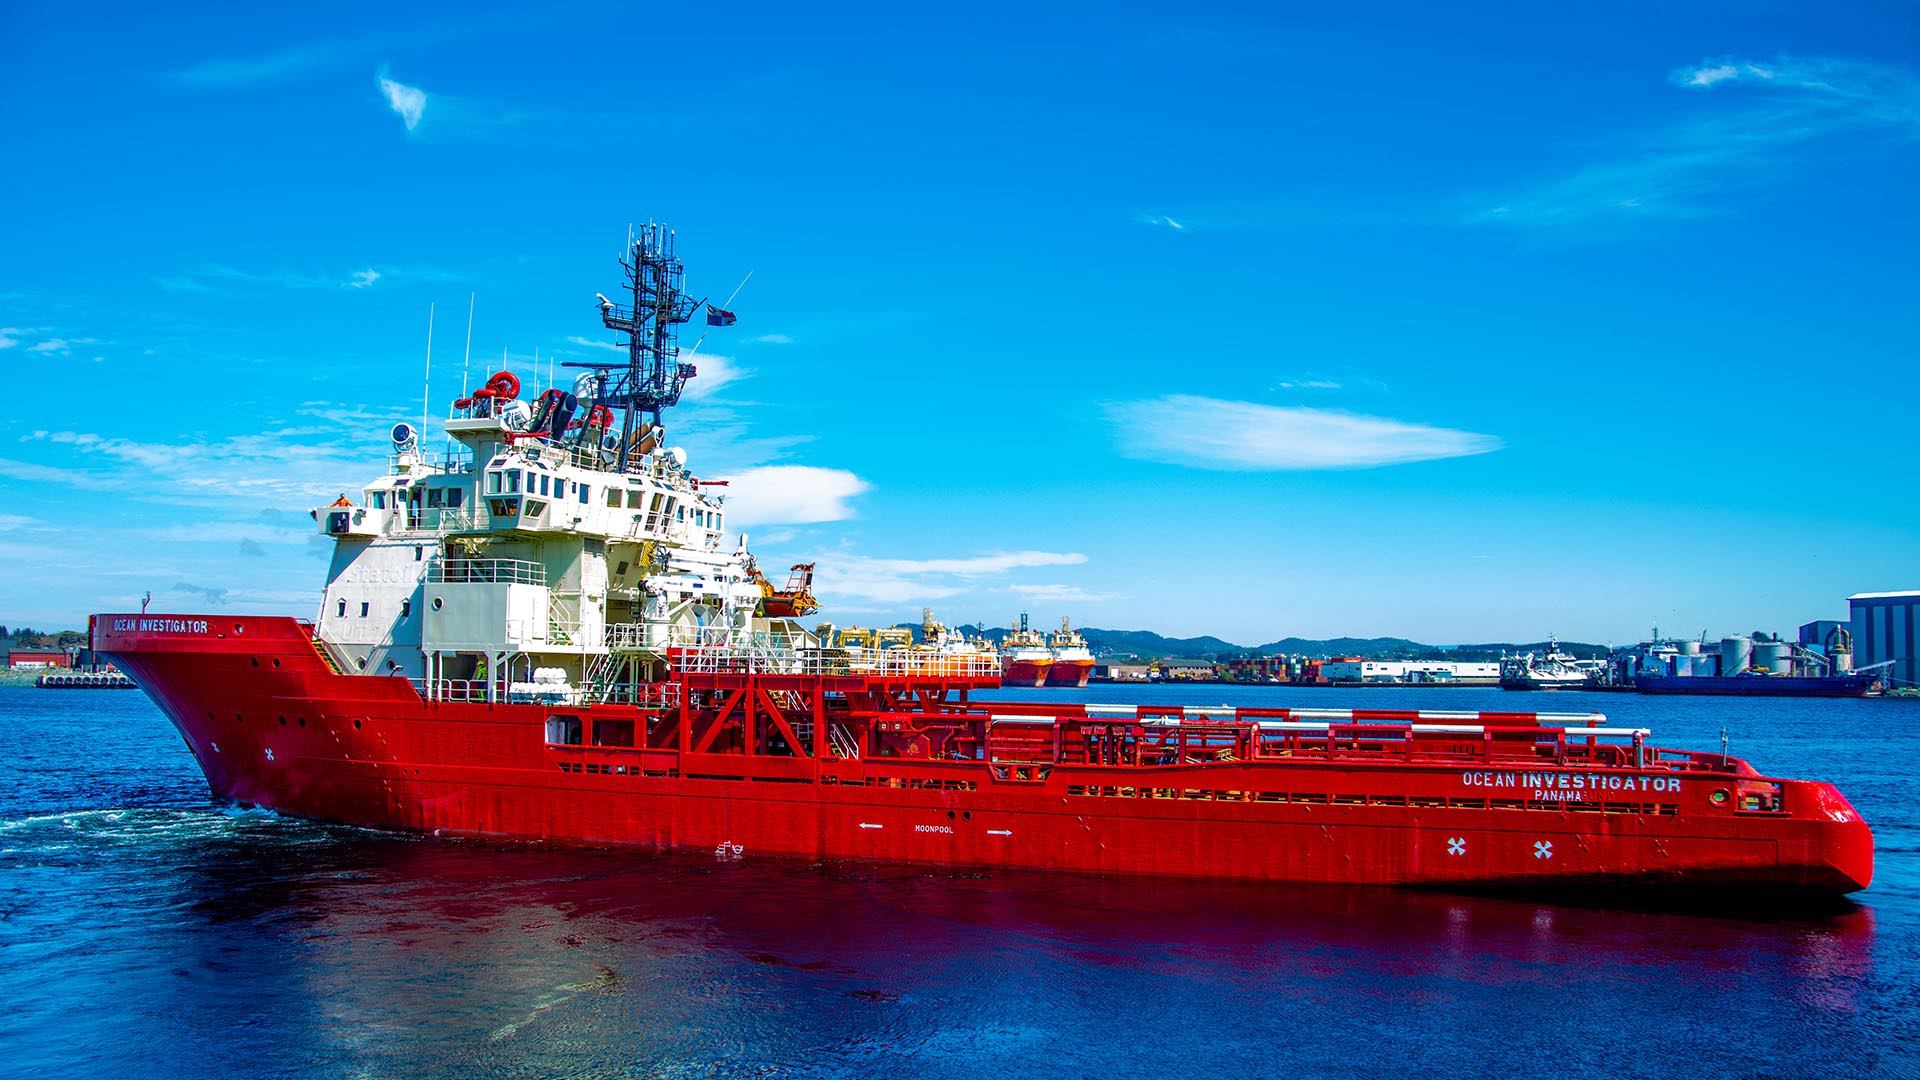 vehicles, offshore support vessel, csv ocean investigator, ship